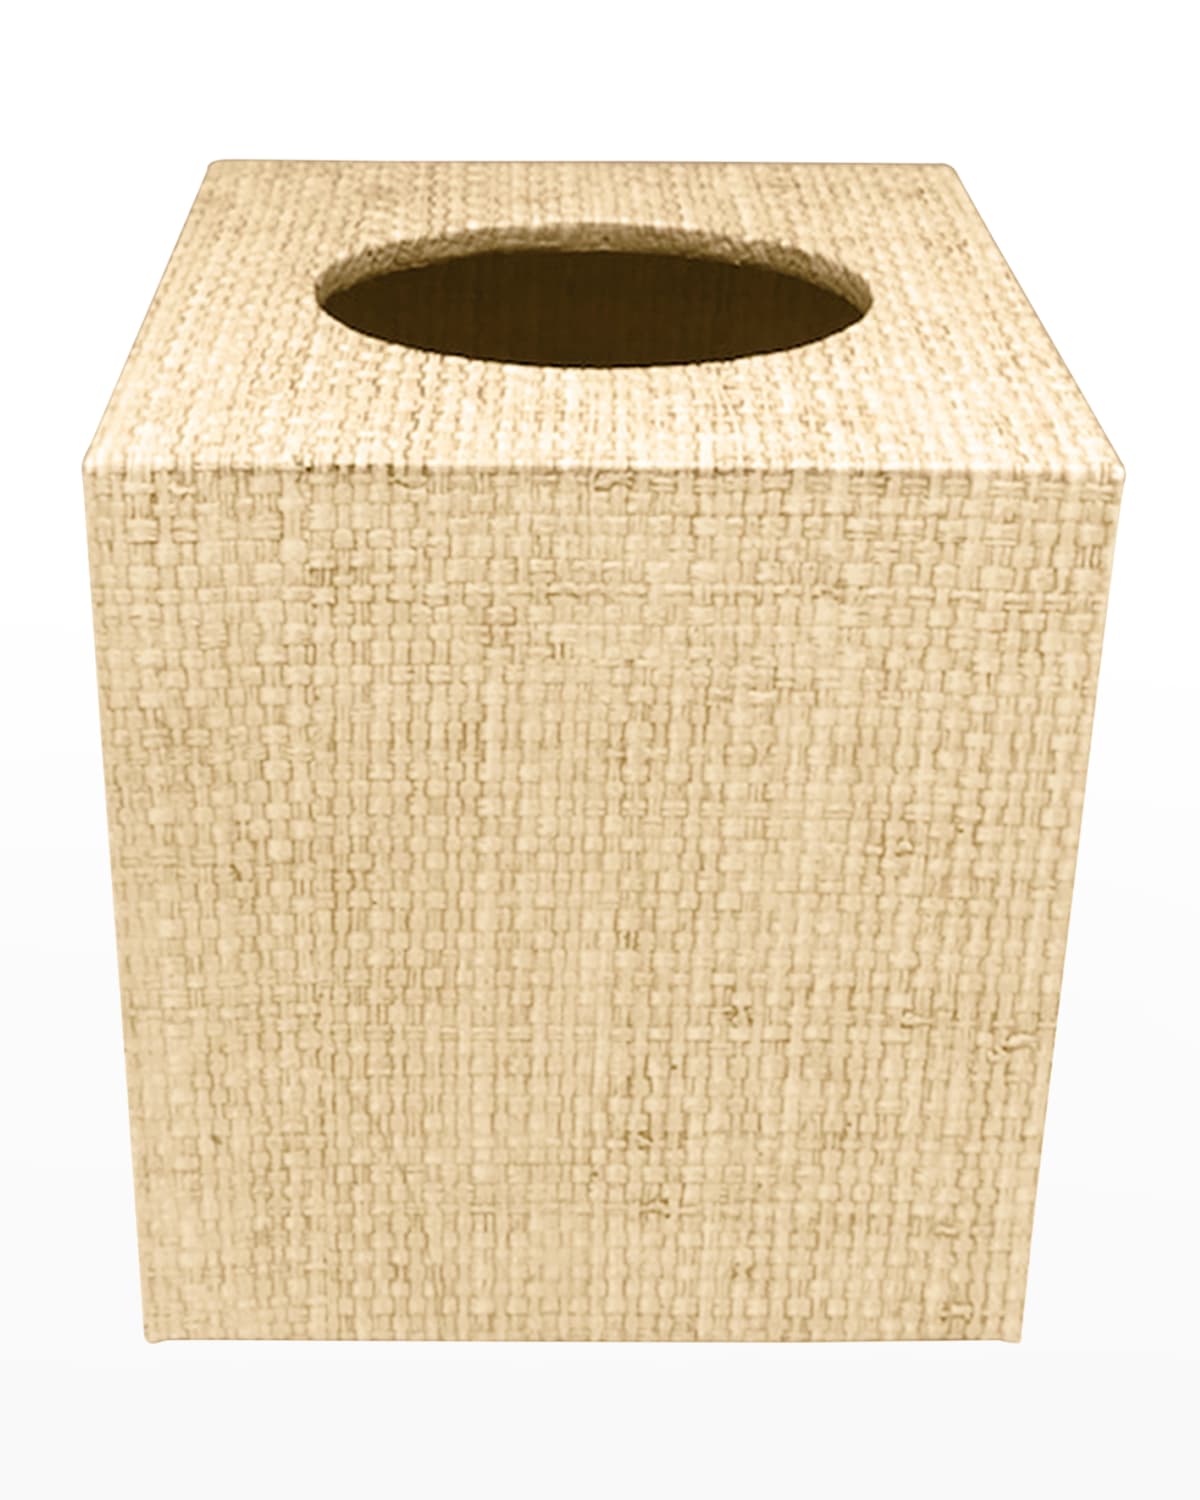 Mariposa Jute Cube Tissue Box Cover, Sand